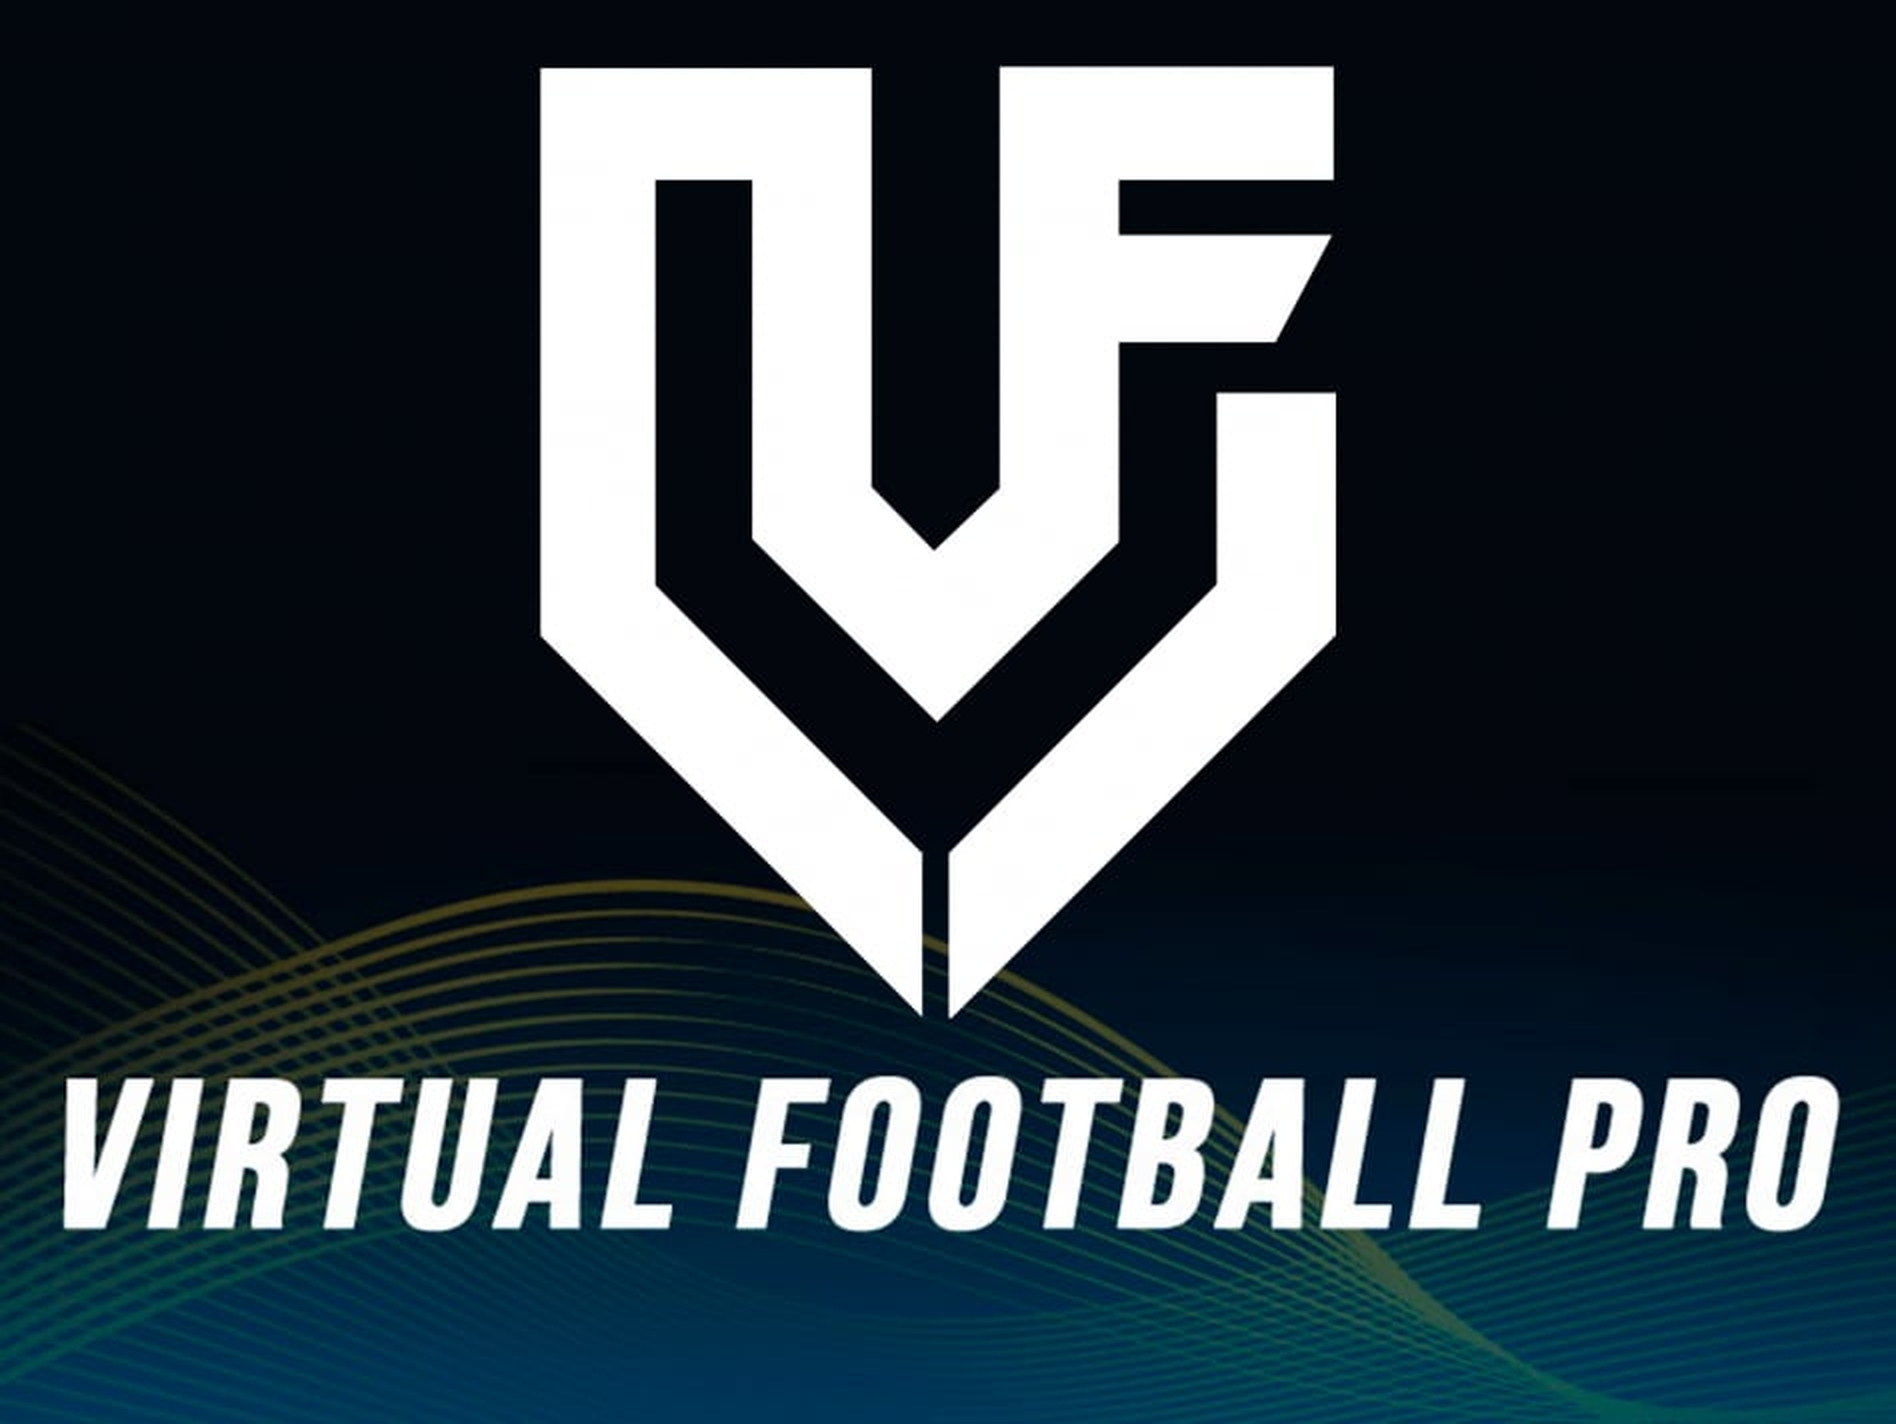 Virtual Football Pro demo